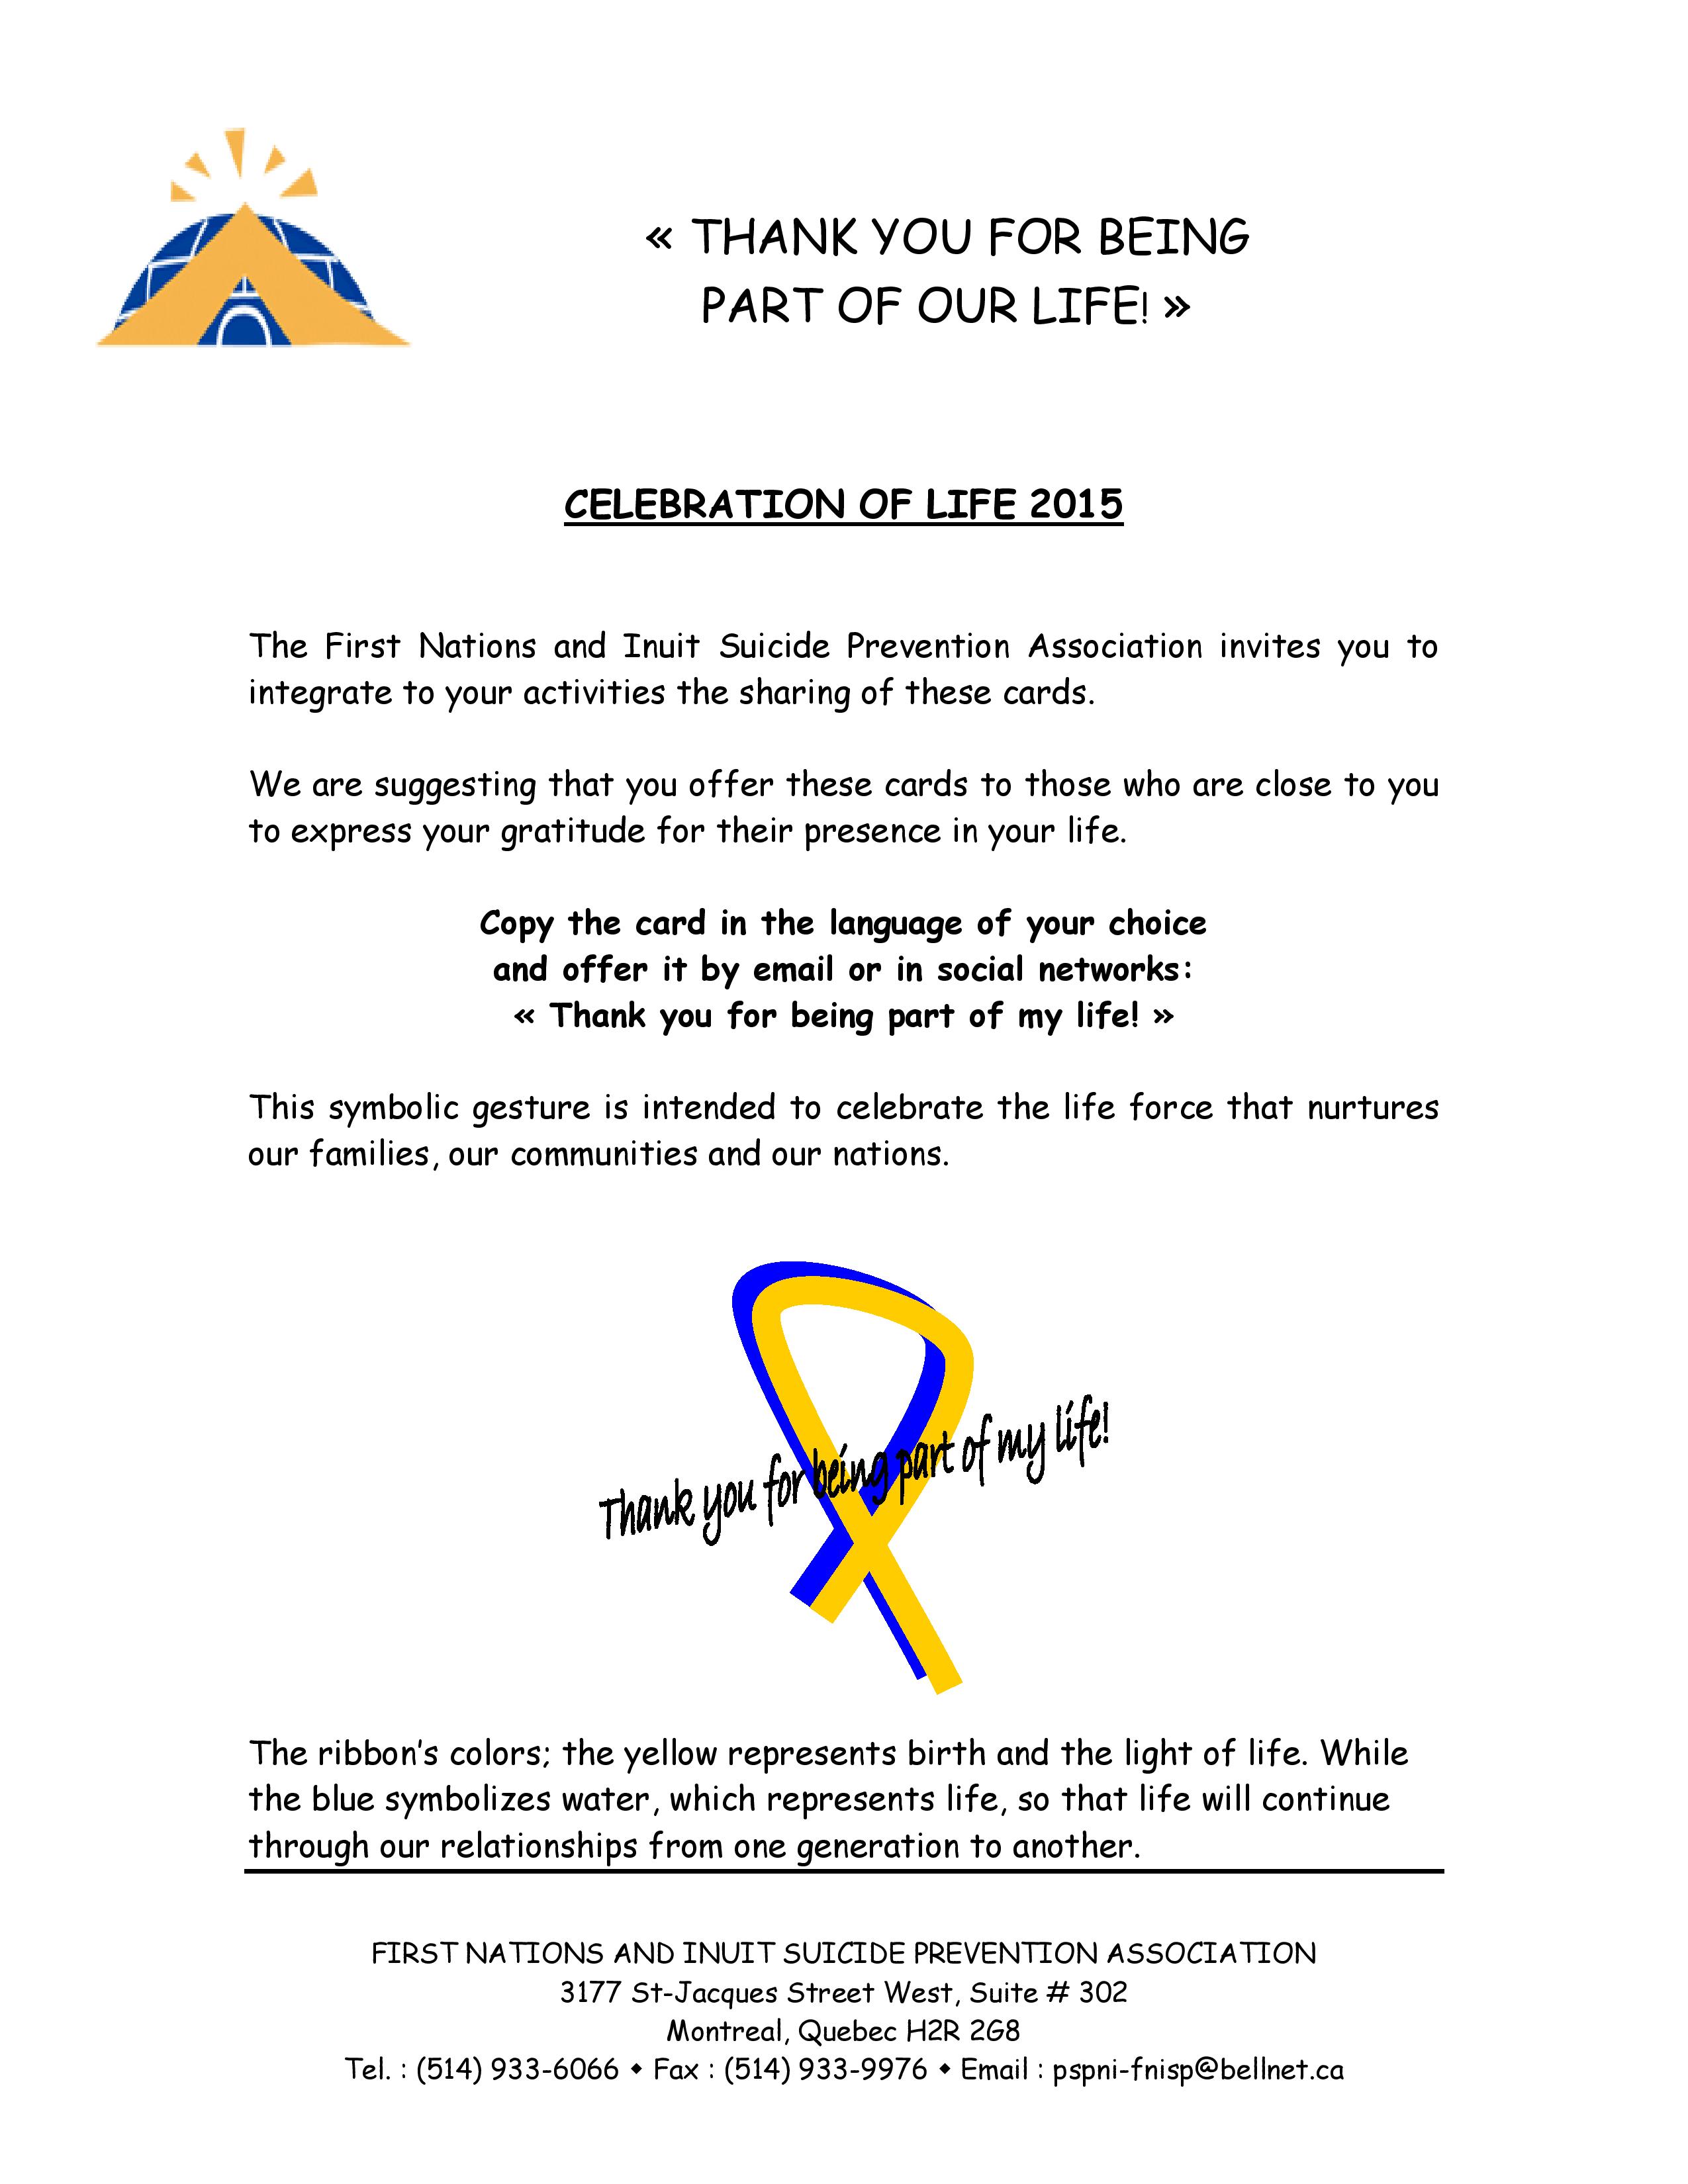 Letter Celebration of Life 2015